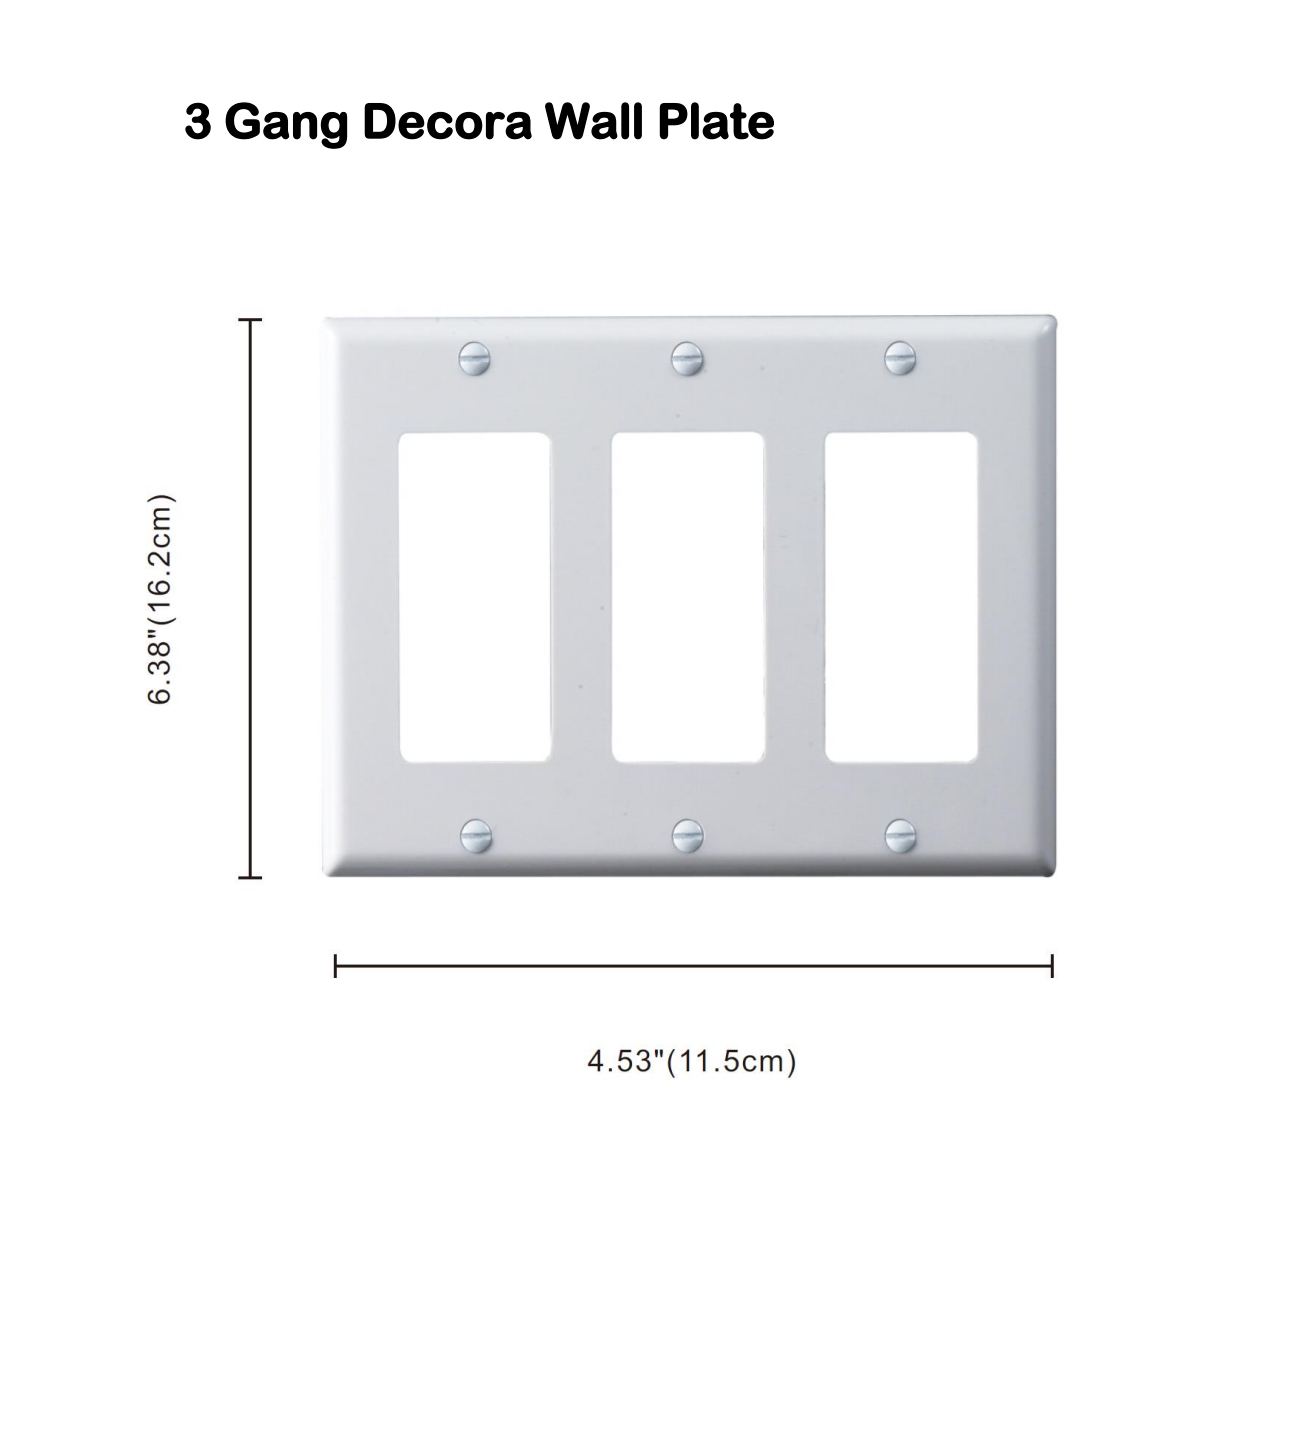 plate 3G white 3 gang decorative wall plate $1.99/pc BULK DEAL 10PCS+ $1.69/PC